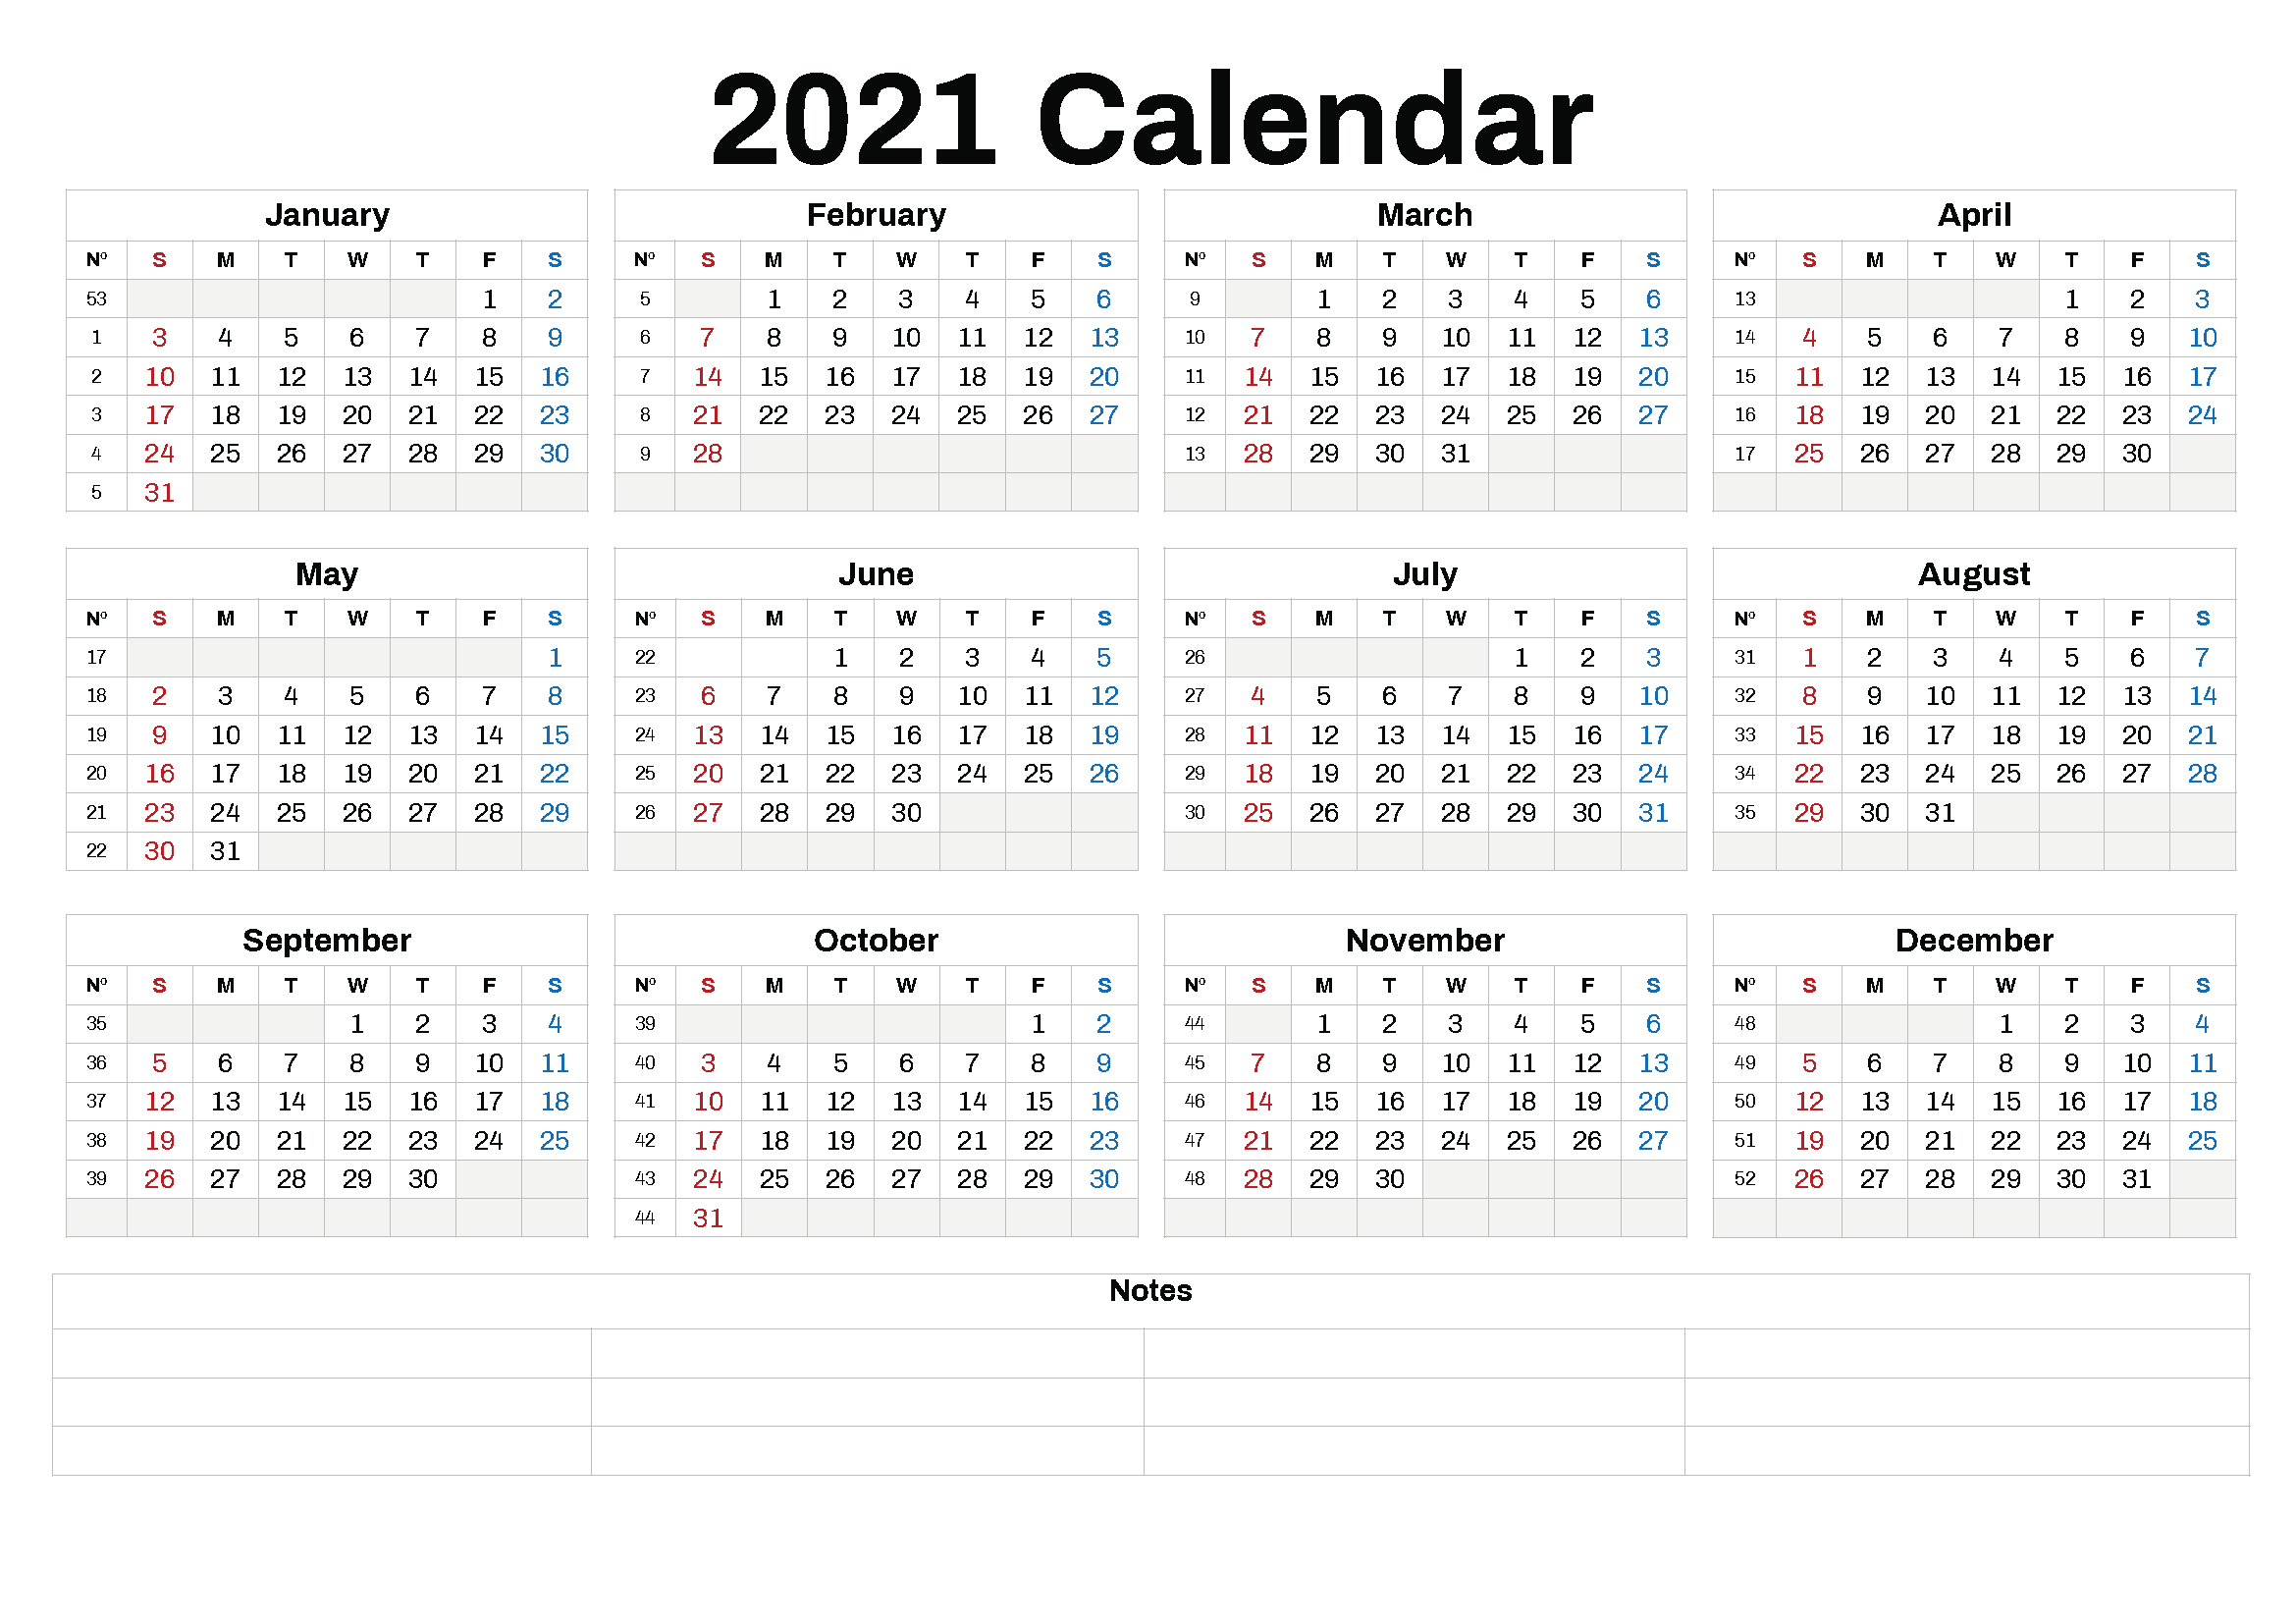 2021 Annual Calendar Template